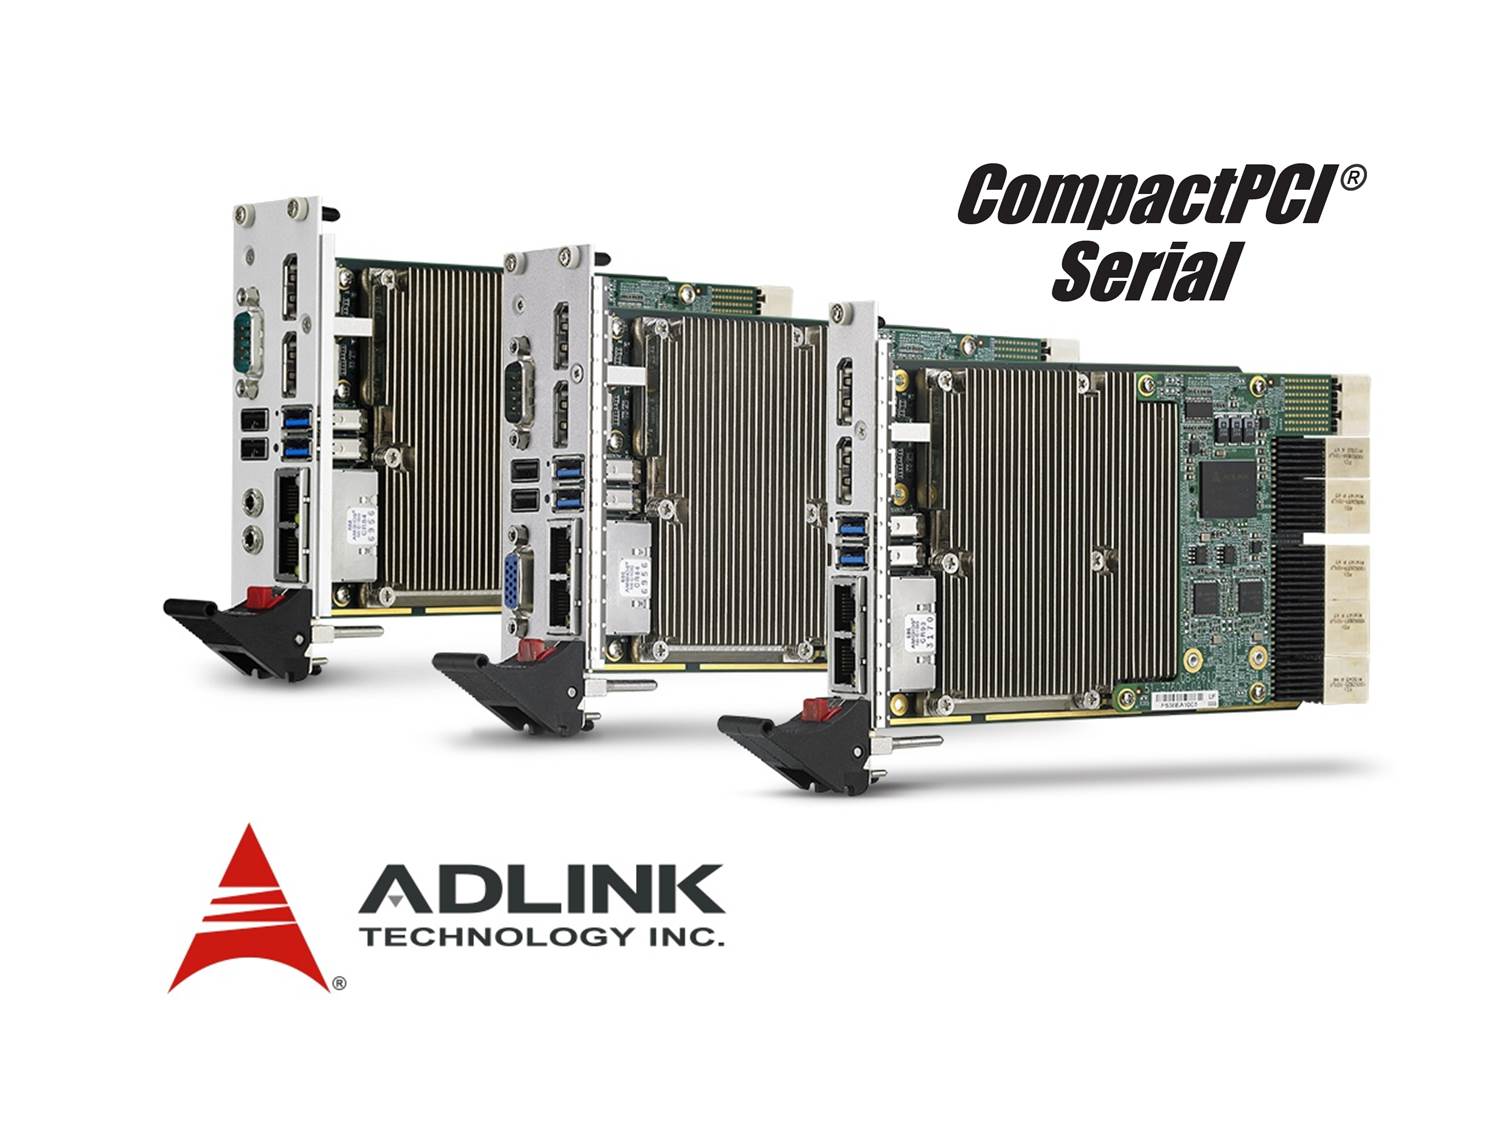 ADLINK cPCI-A3515_3U CompactPCI Serial Processor Blades